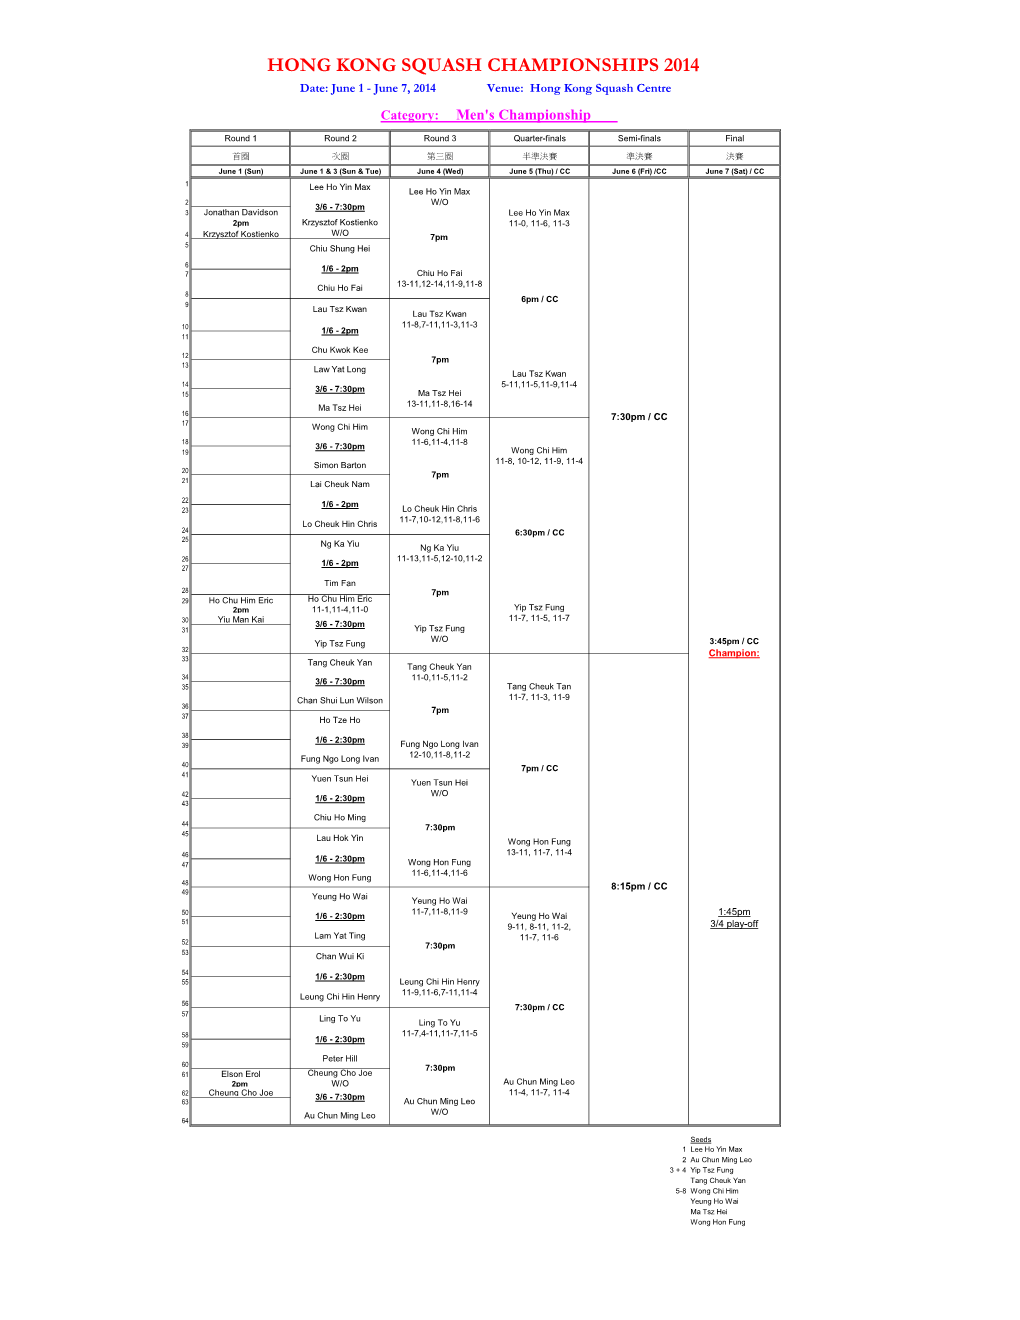 HONG KONG SQUASH CHAMPIONSHIPS 2014 Date: June 1 - June 7, 2014 Venue: Hong Kong Squash Centre Category: Men's Championship